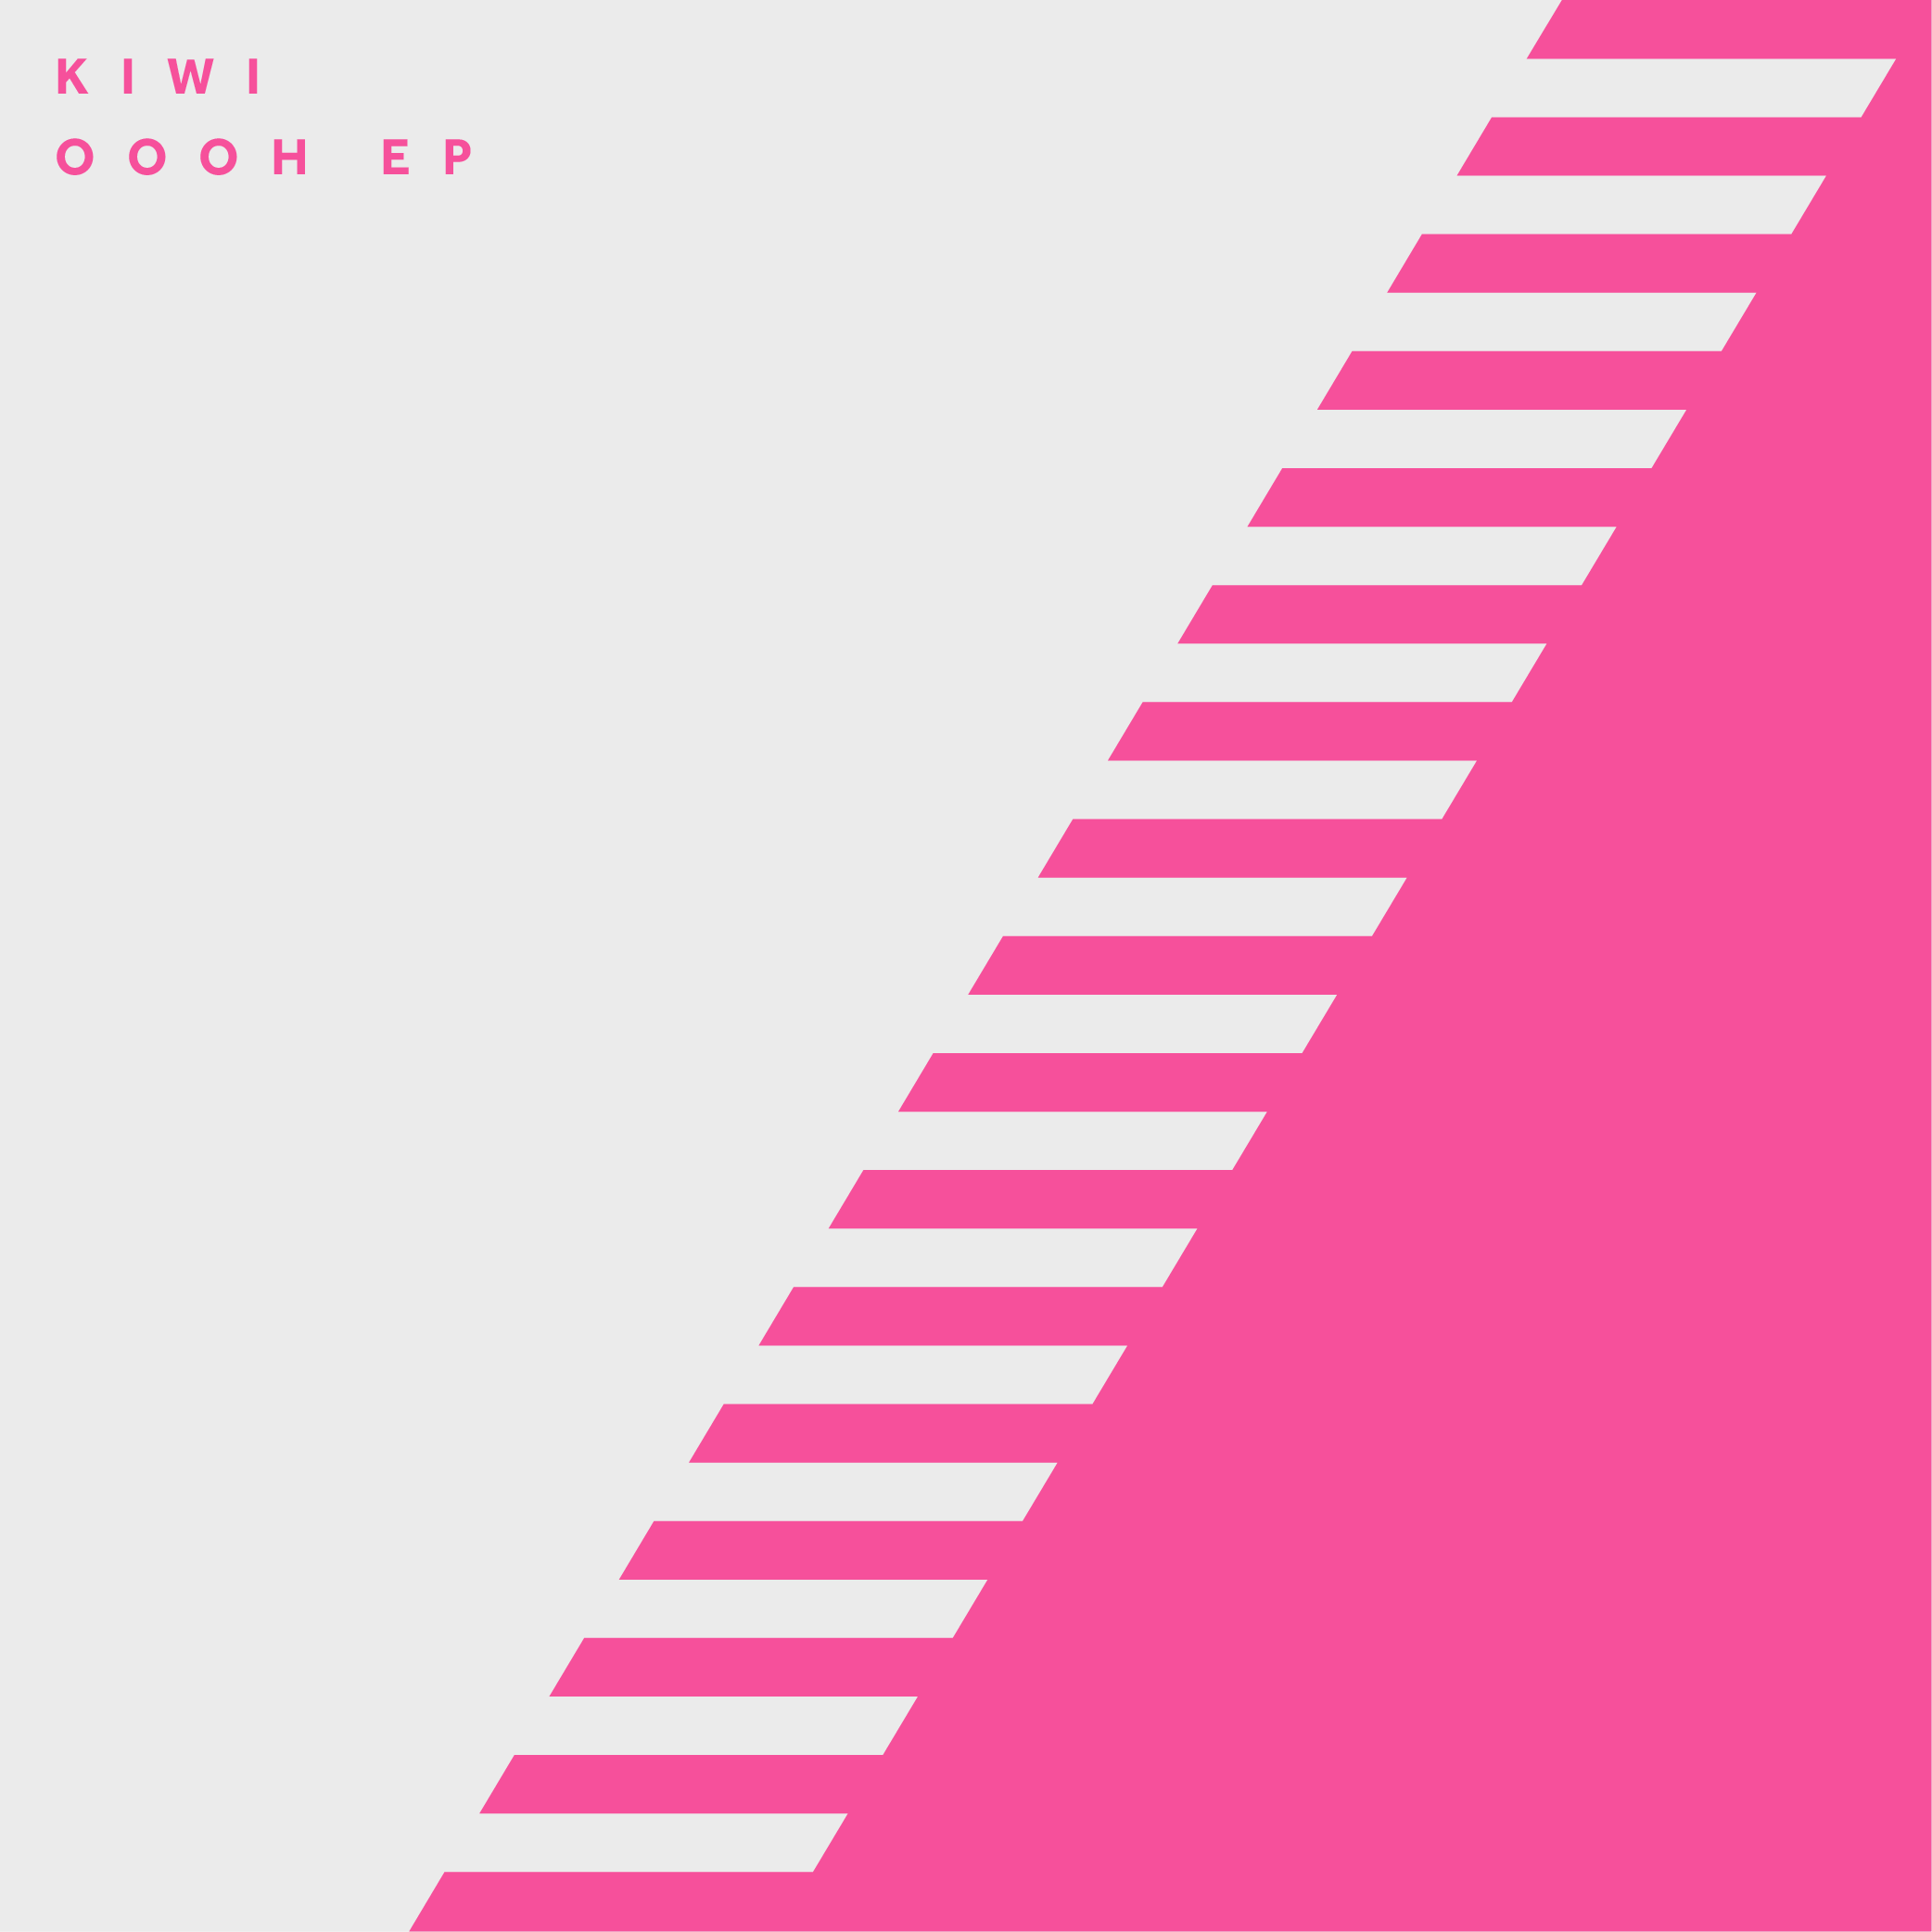 KIWI – OOOH EP